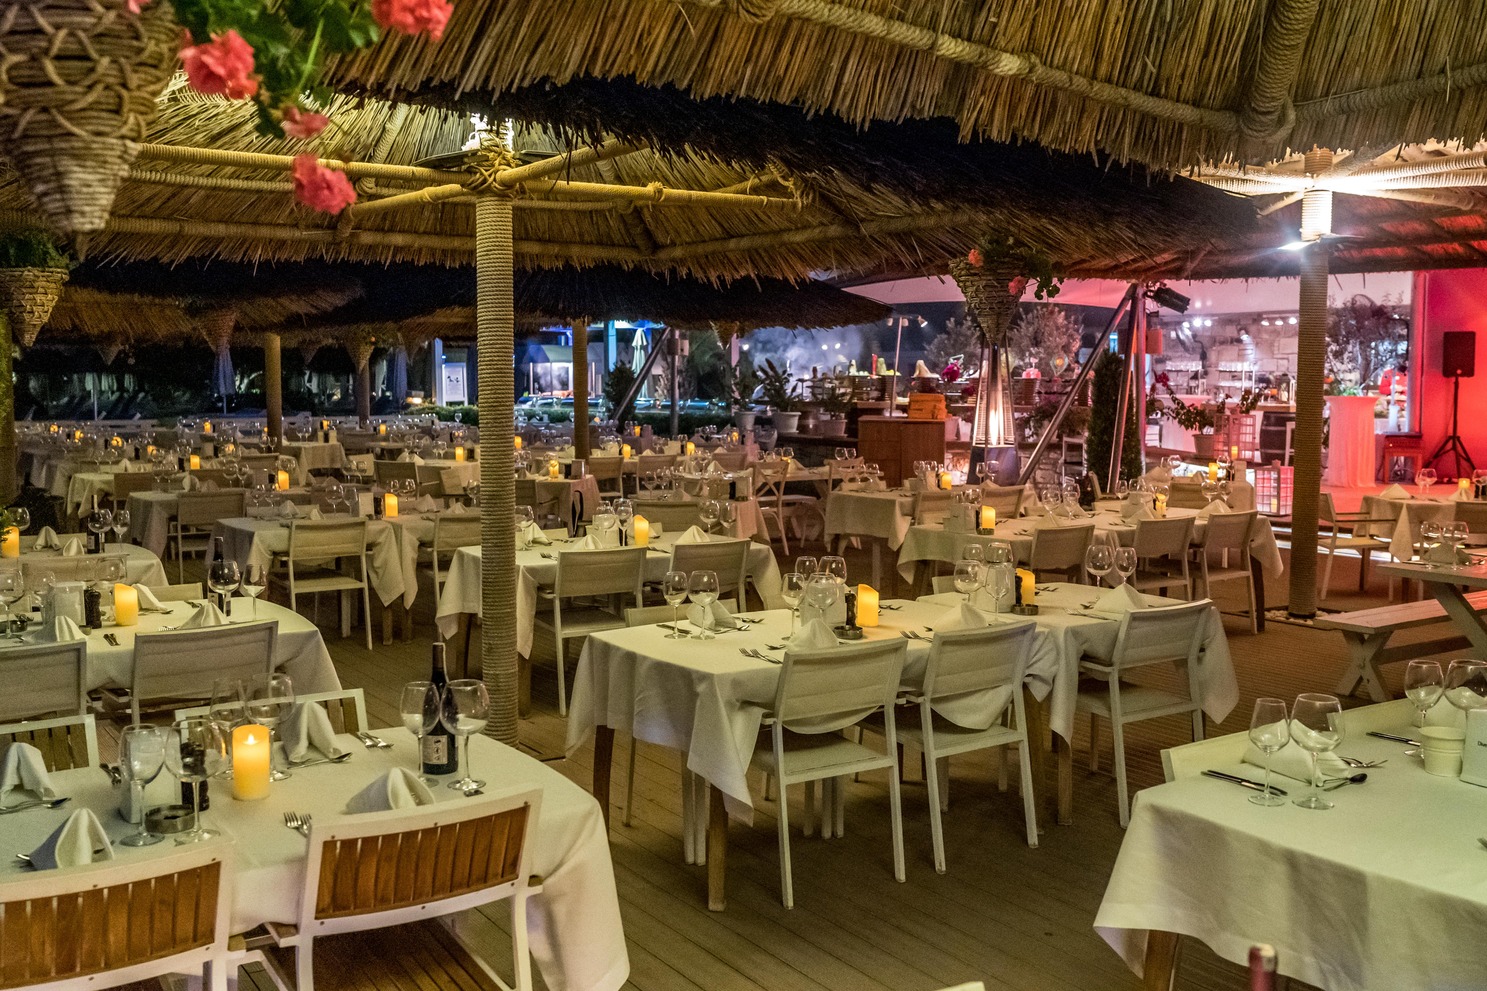 MW Phokaia Beach & Resort - Jetty Bar